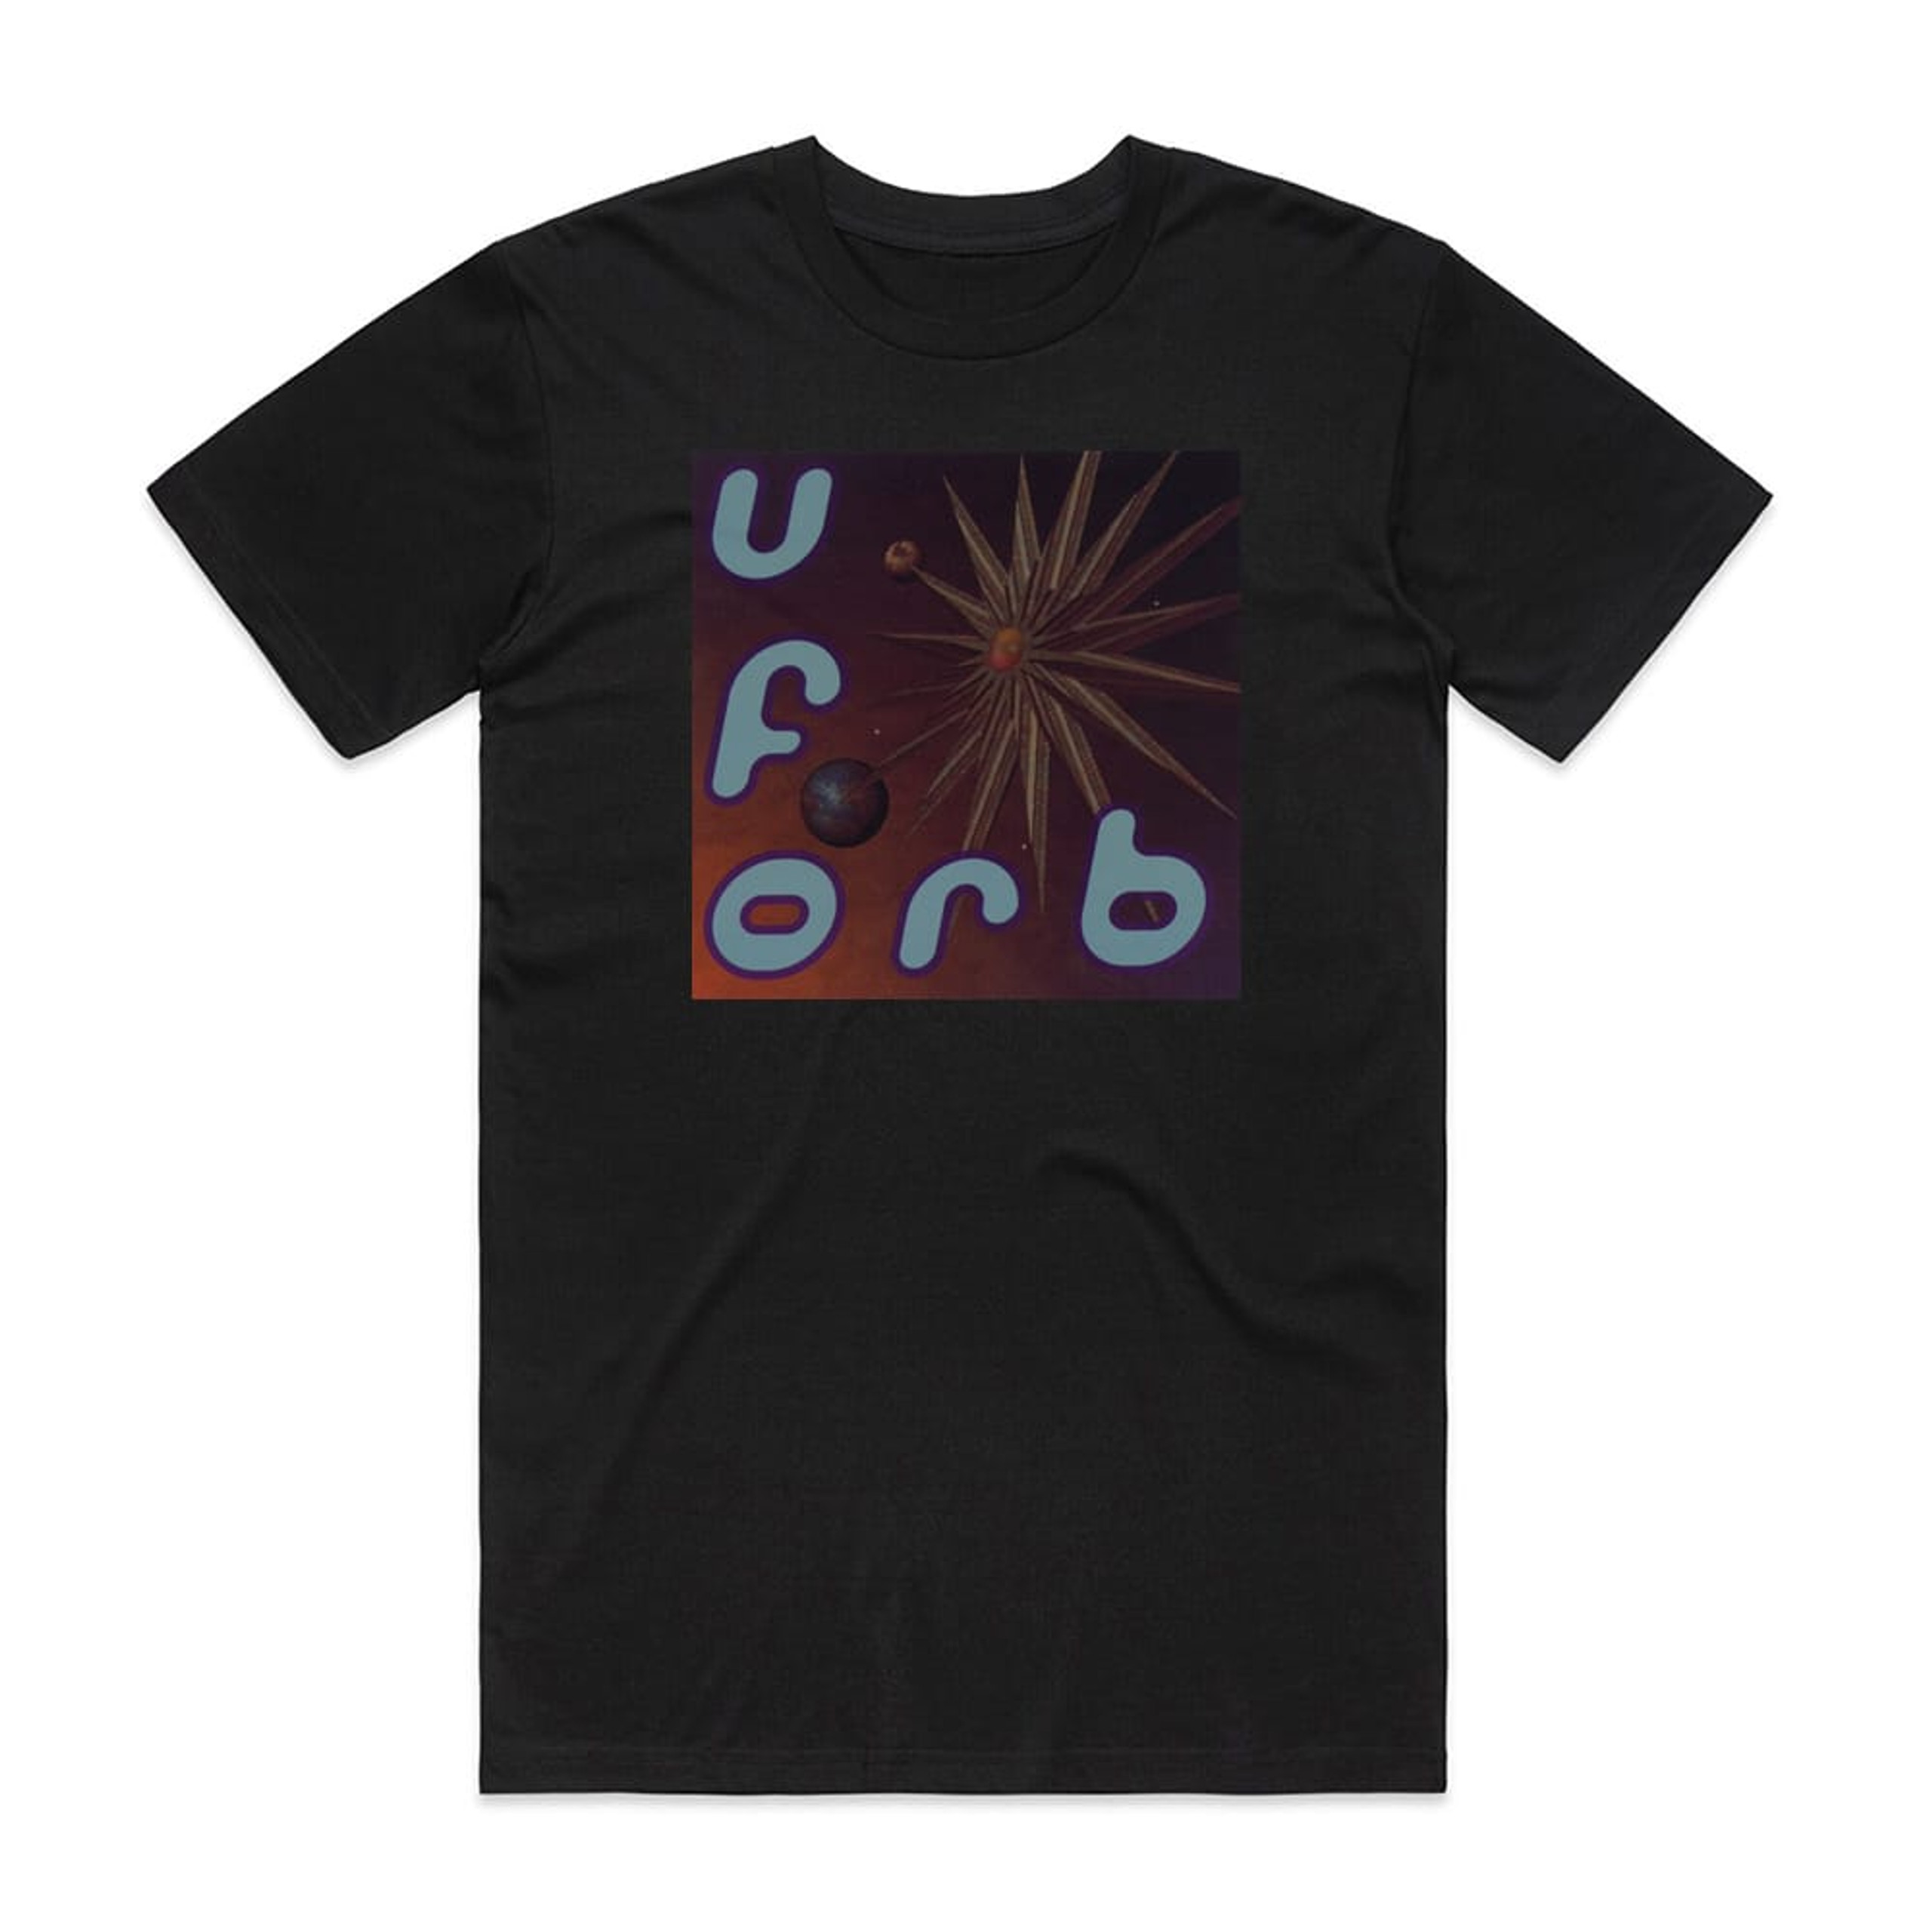 The Orb Uforb Album Cover T-Shirt Black